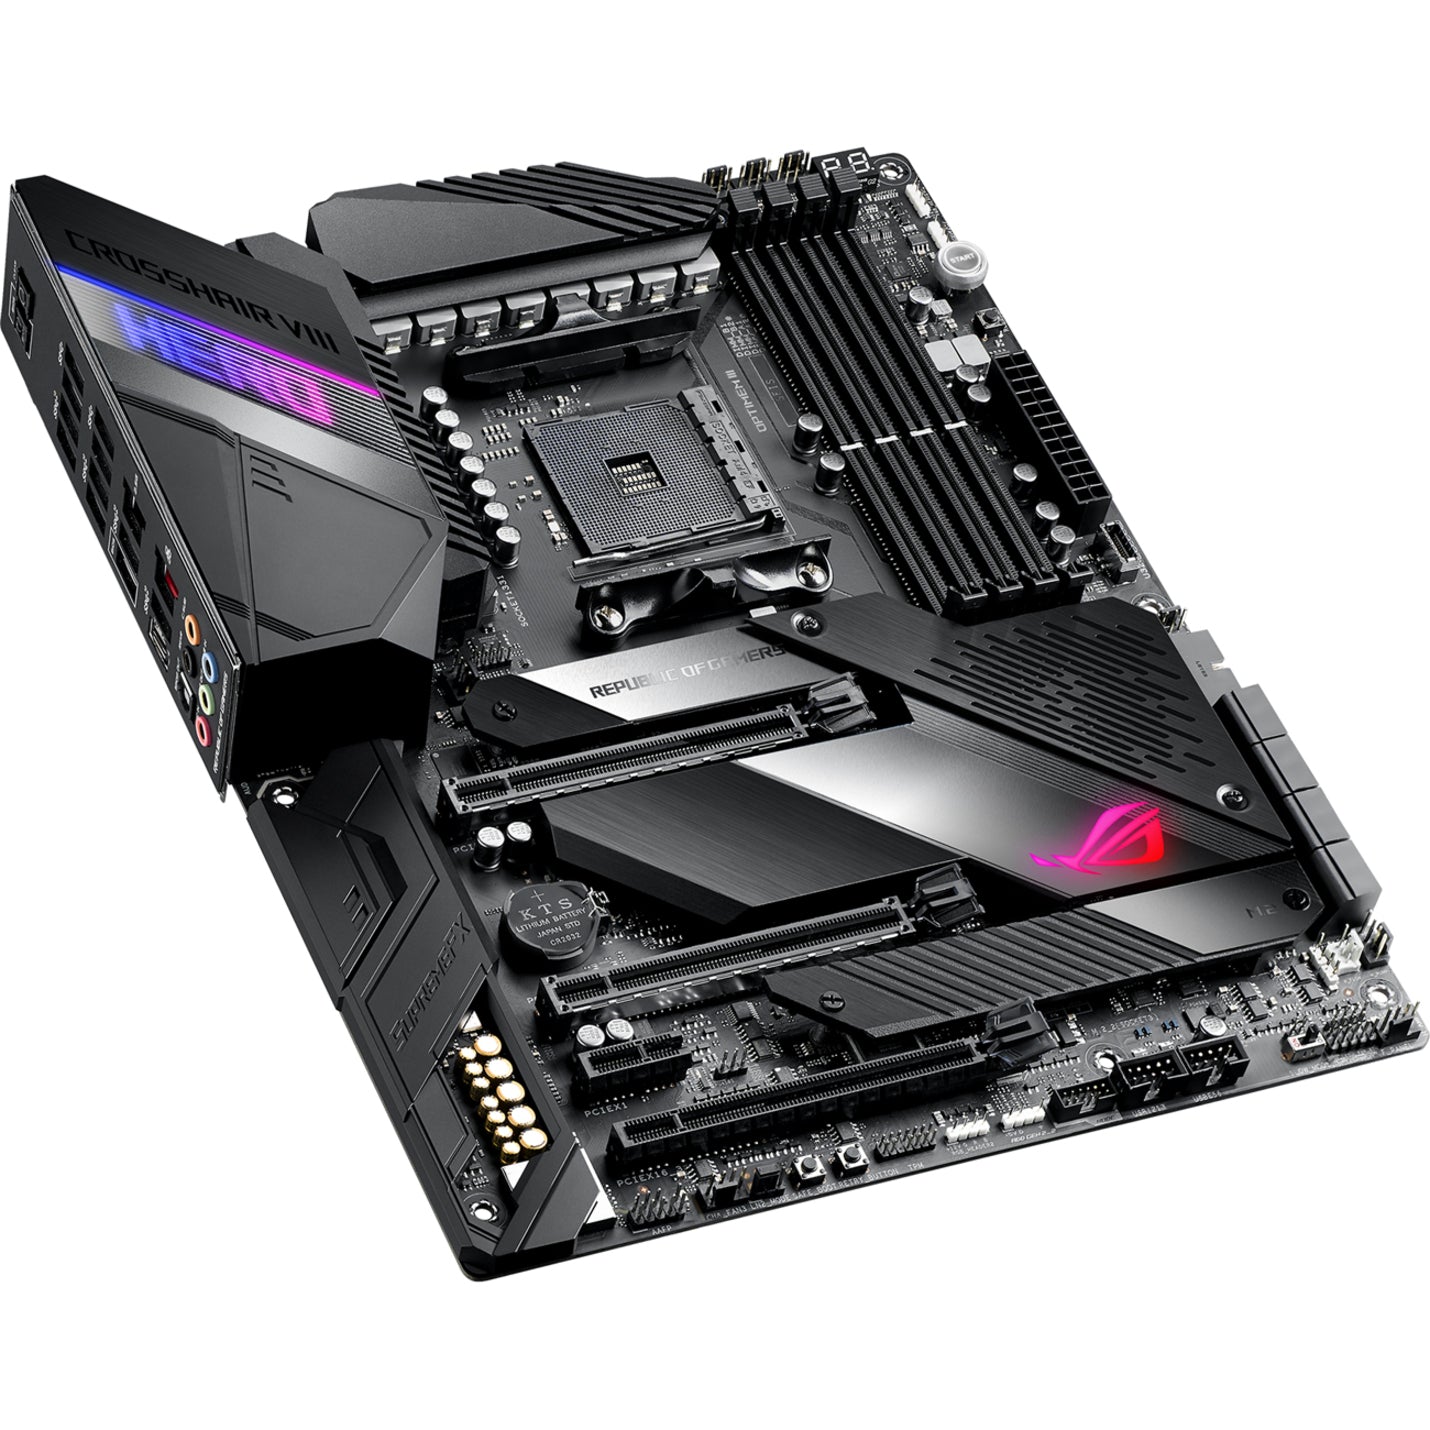 Asus ROG CROSSHAIR VIII HERO WI-FI X570 Desktop Motherboard, AMD Ryzen AM4, 3rd Generation, ATX